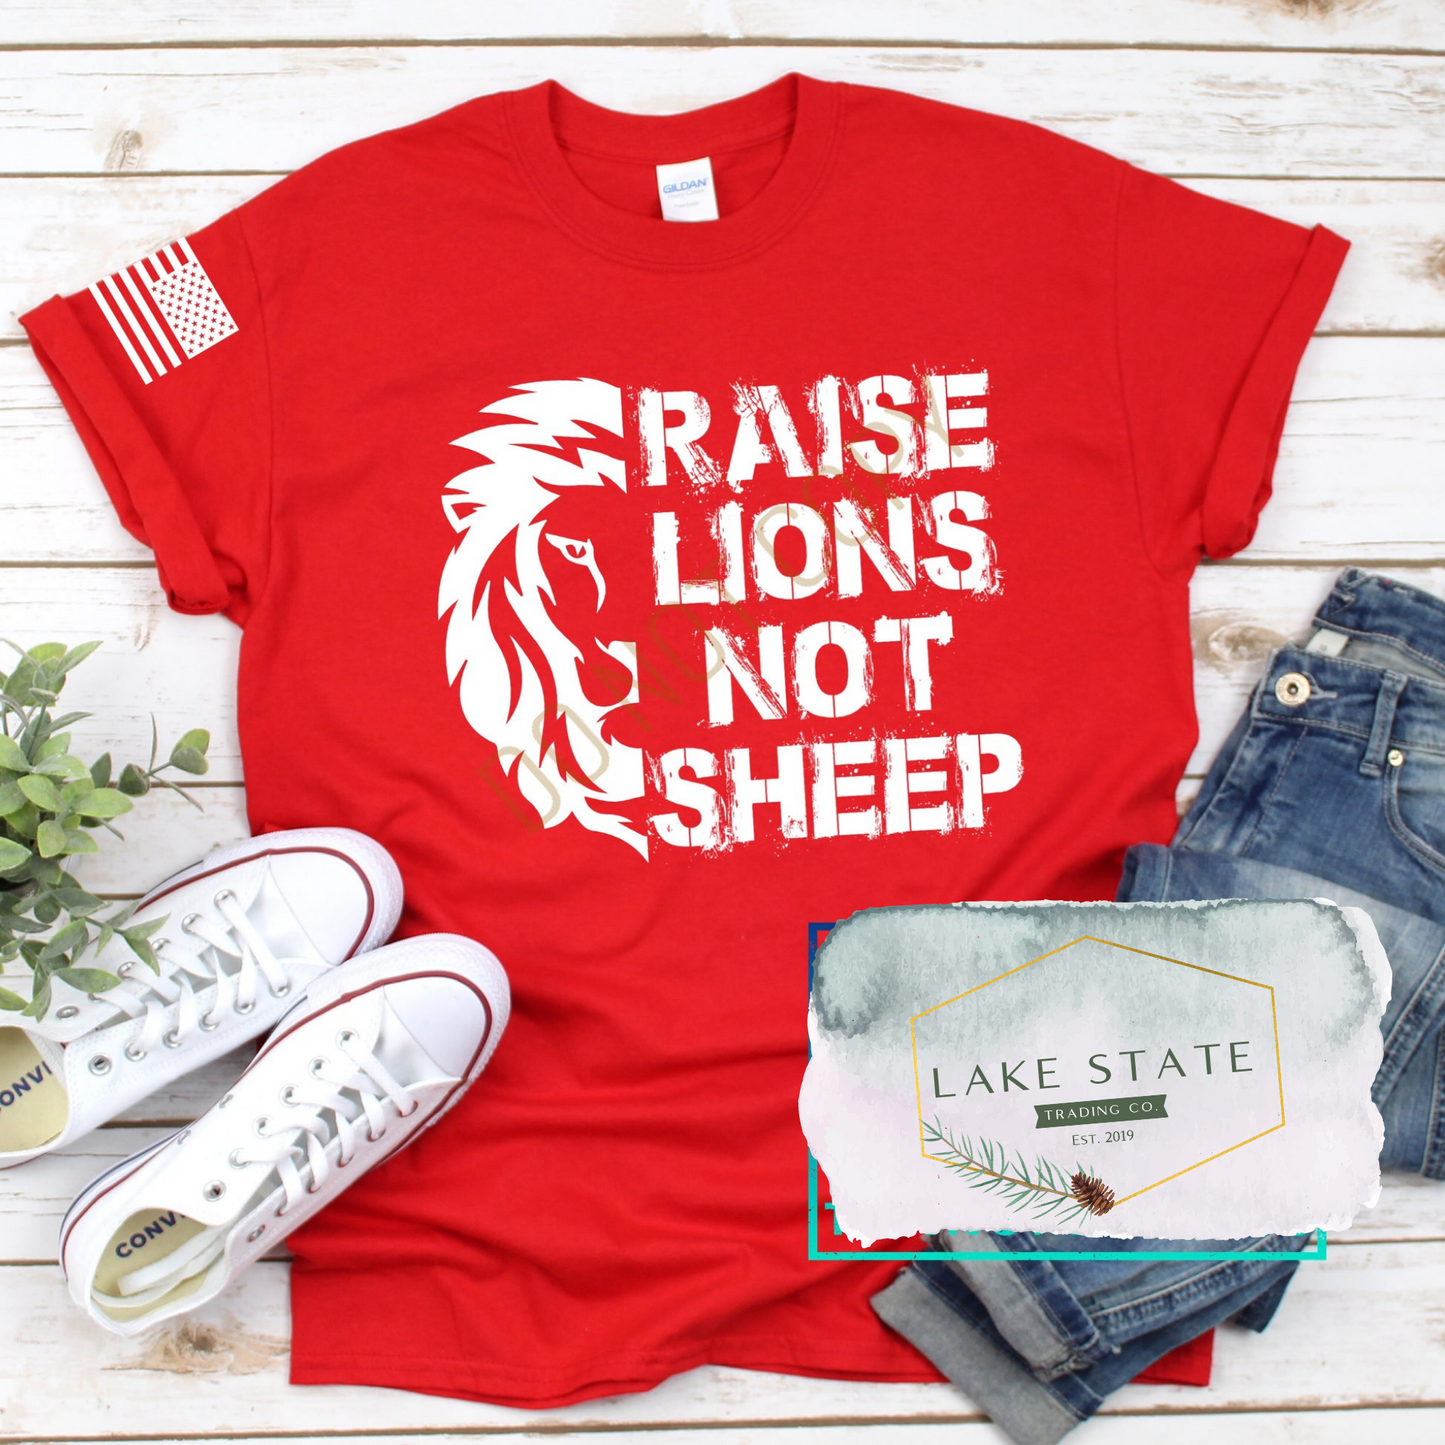 Raising Lions, not sheep